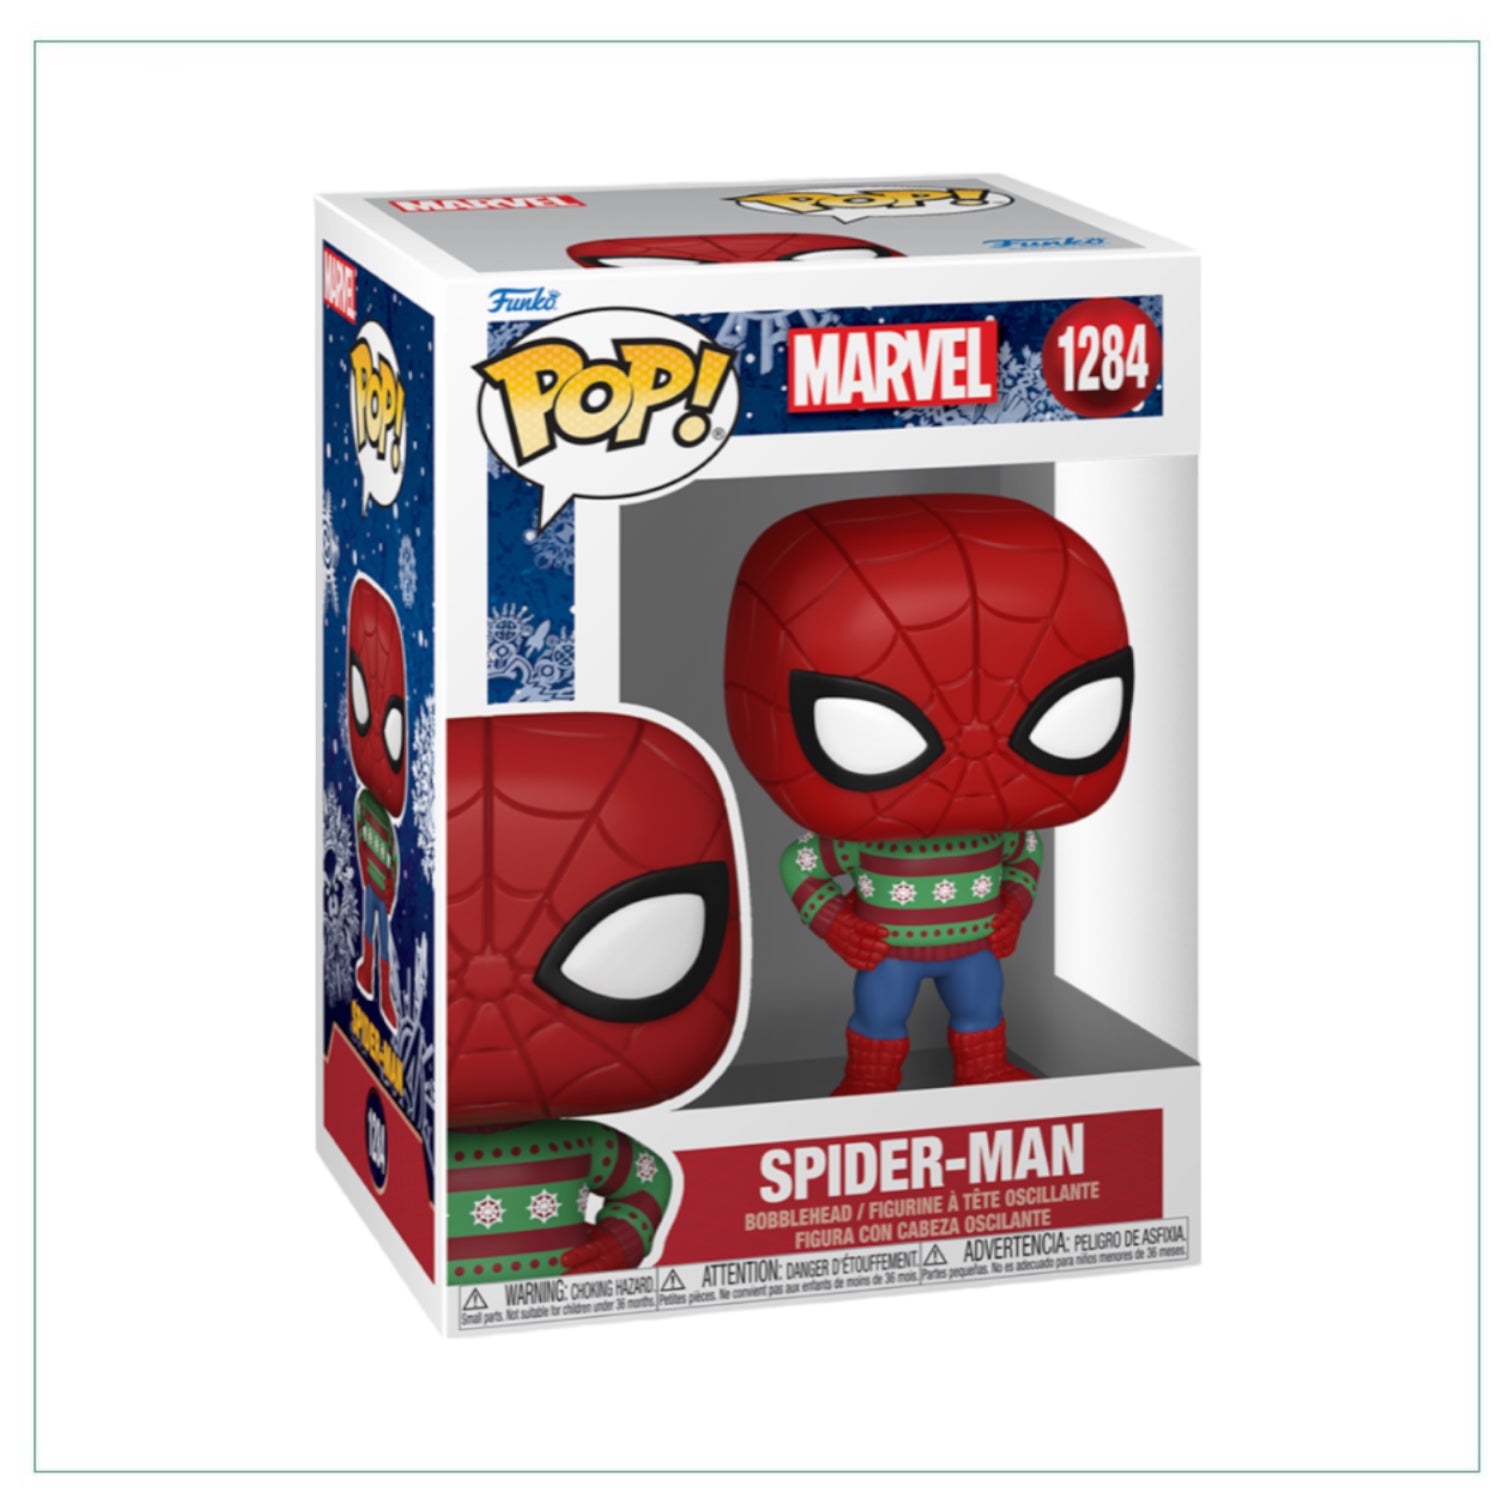 Spider-Man #1284 Funko Pop! -Marvel Holiday